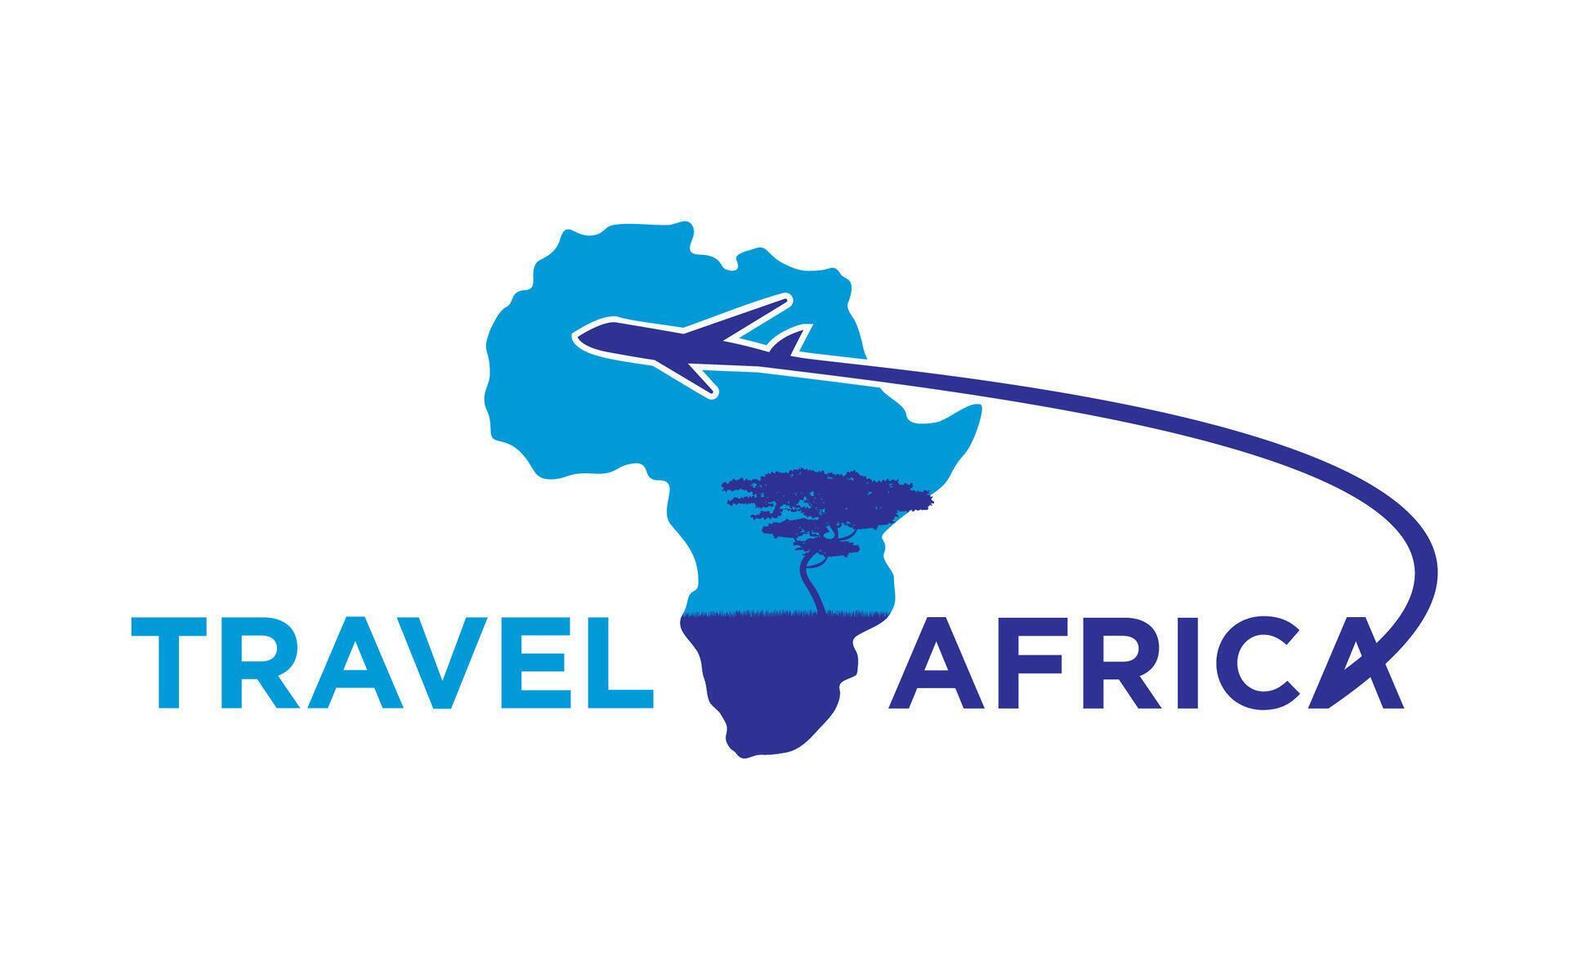 Africa travel logo design template vector